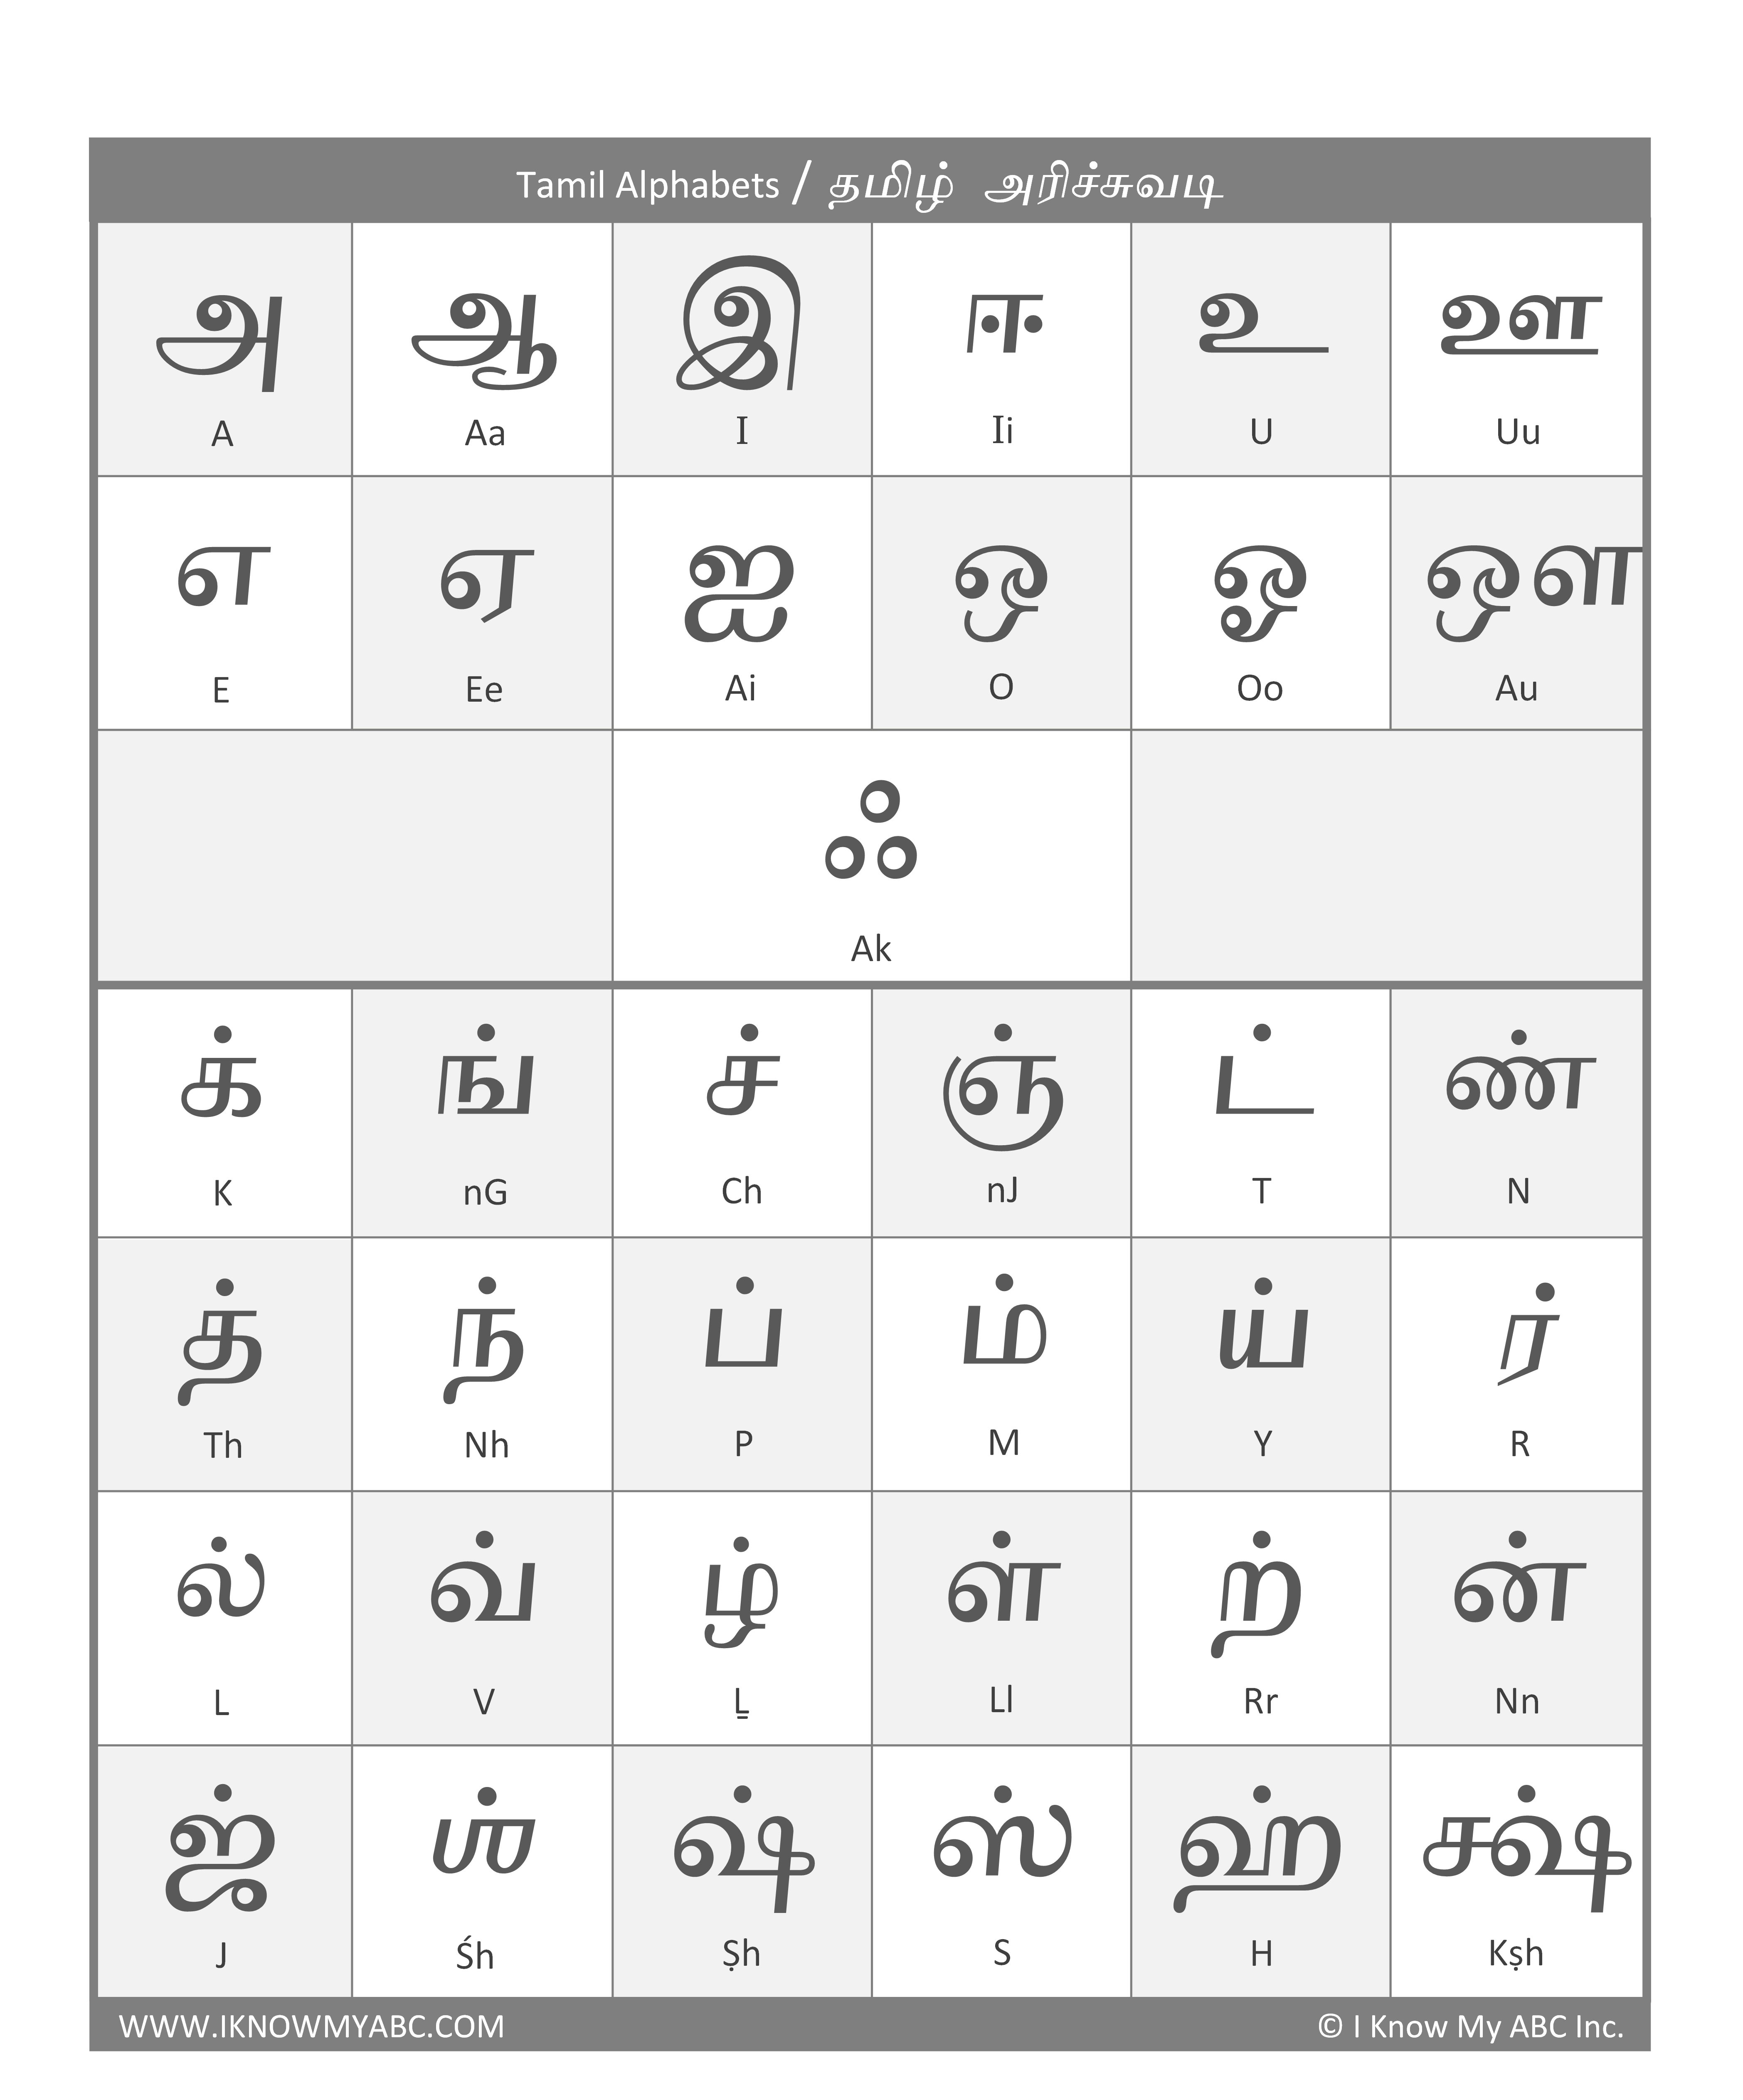 bengali letters tamil alphabets